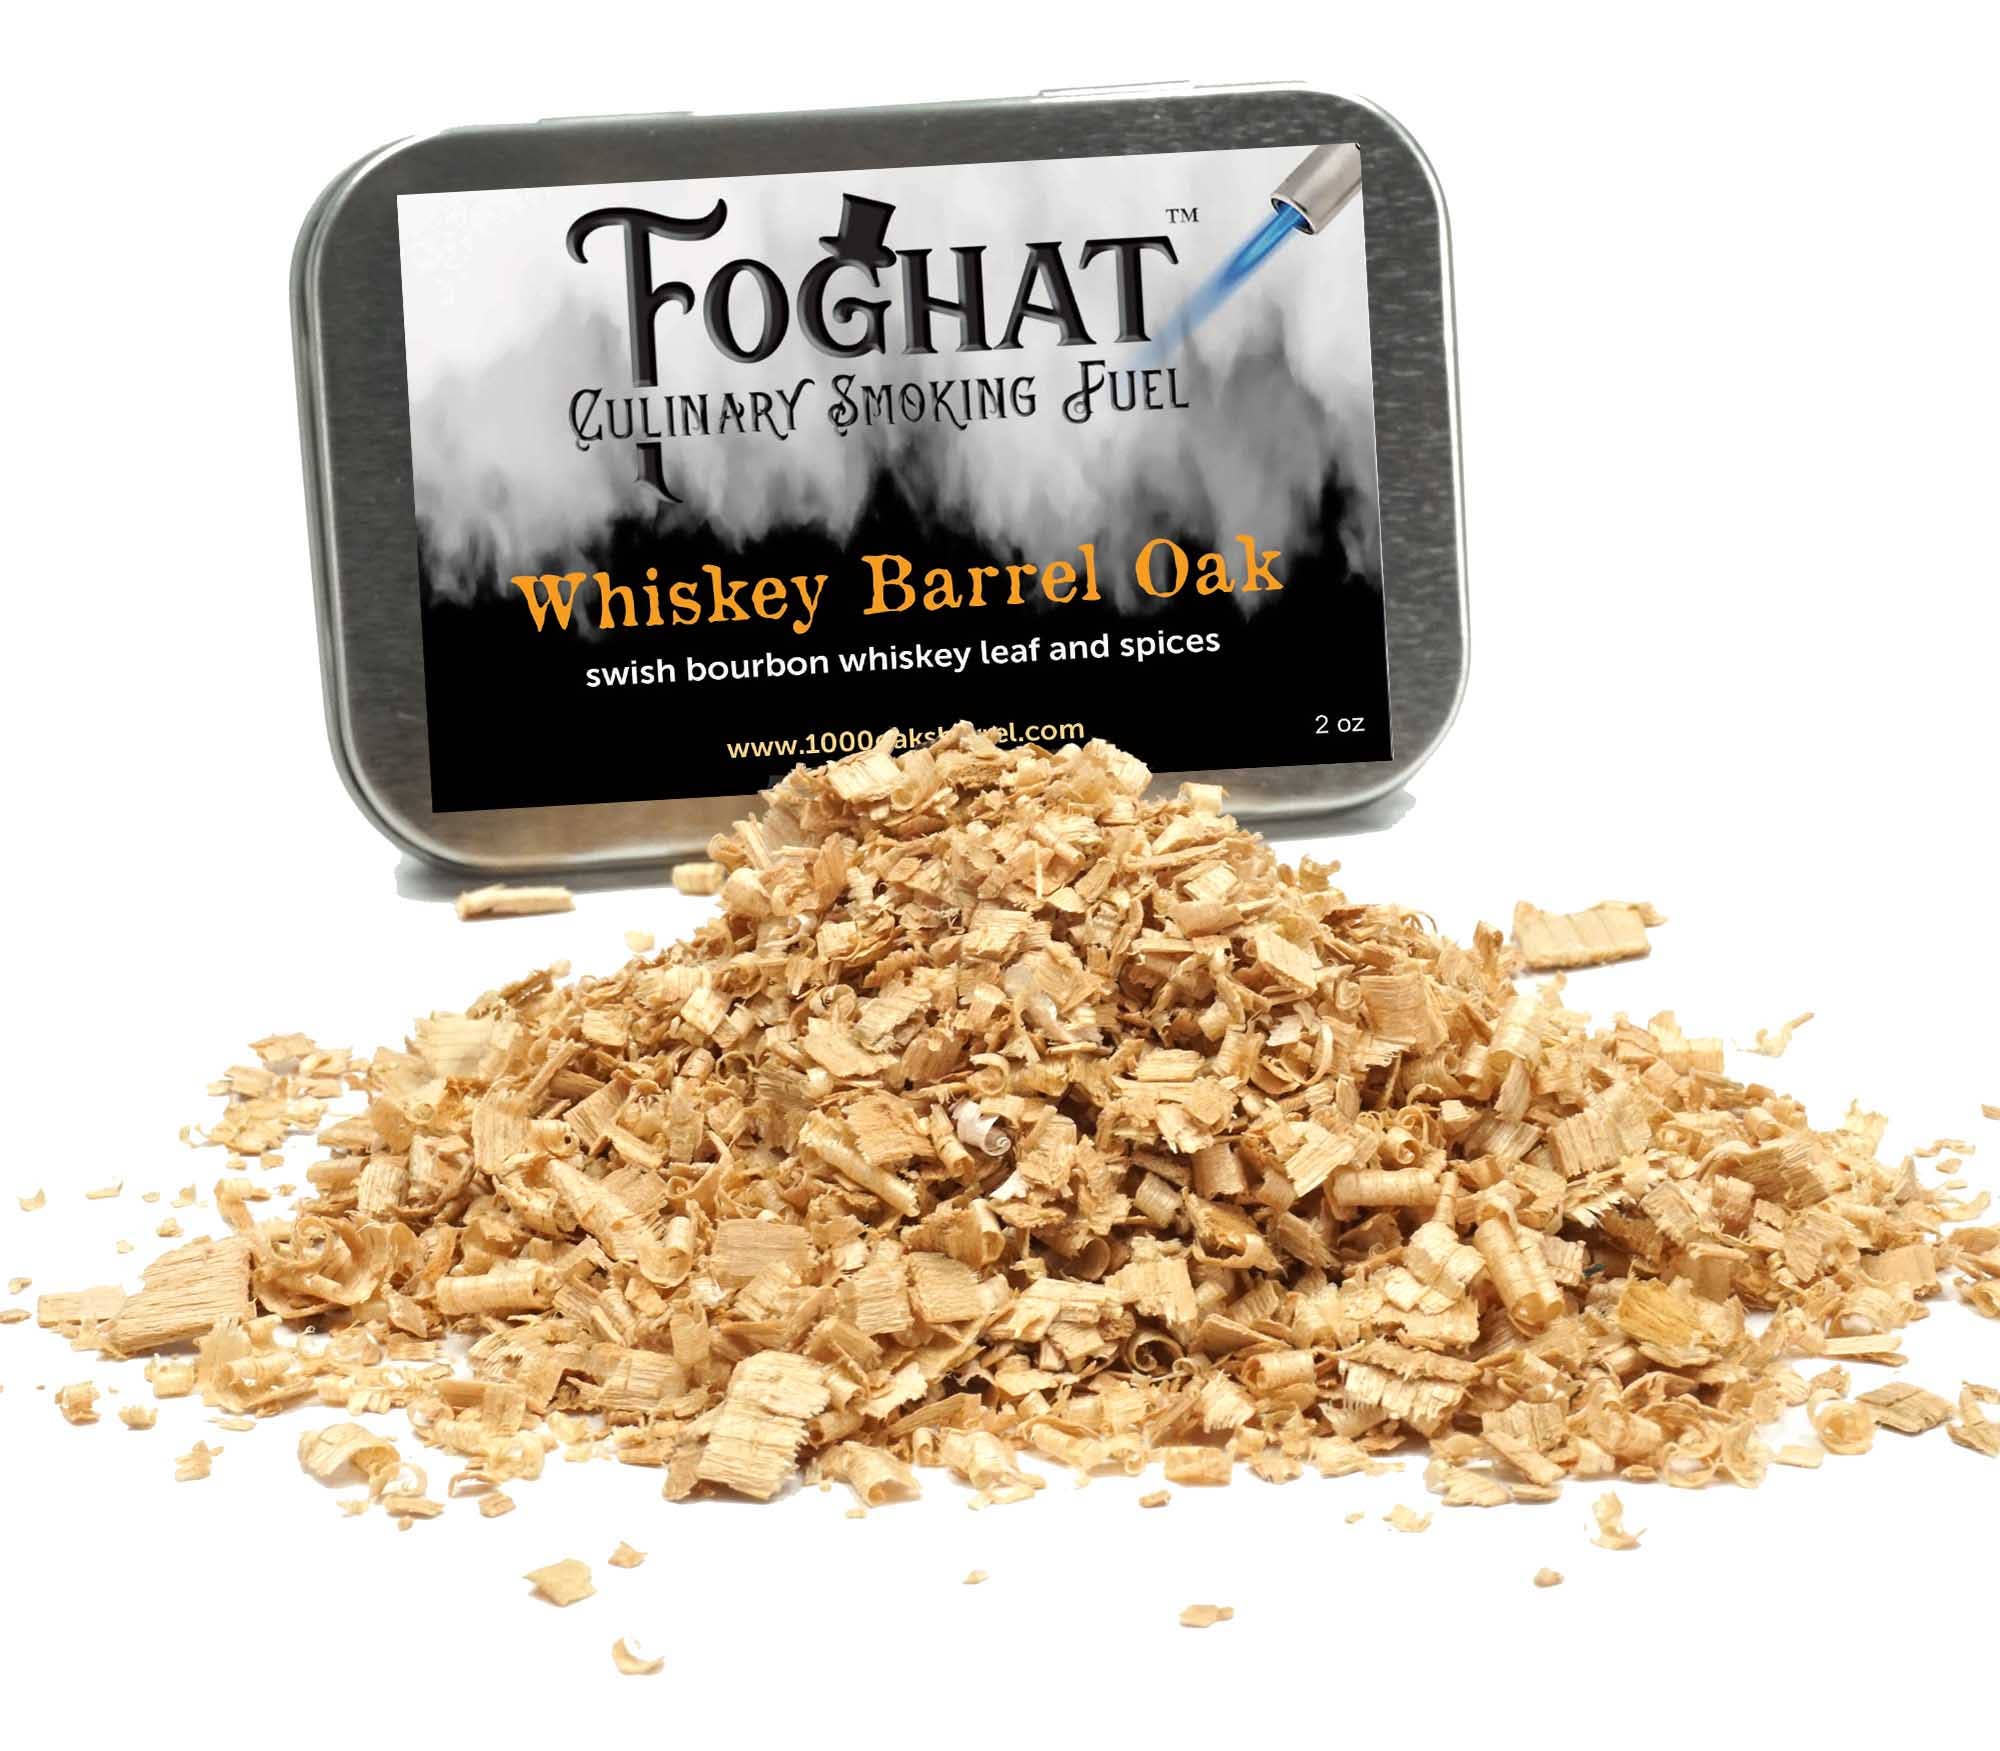 Foghat Smoking Fuel -Whiskey Barrel Oak